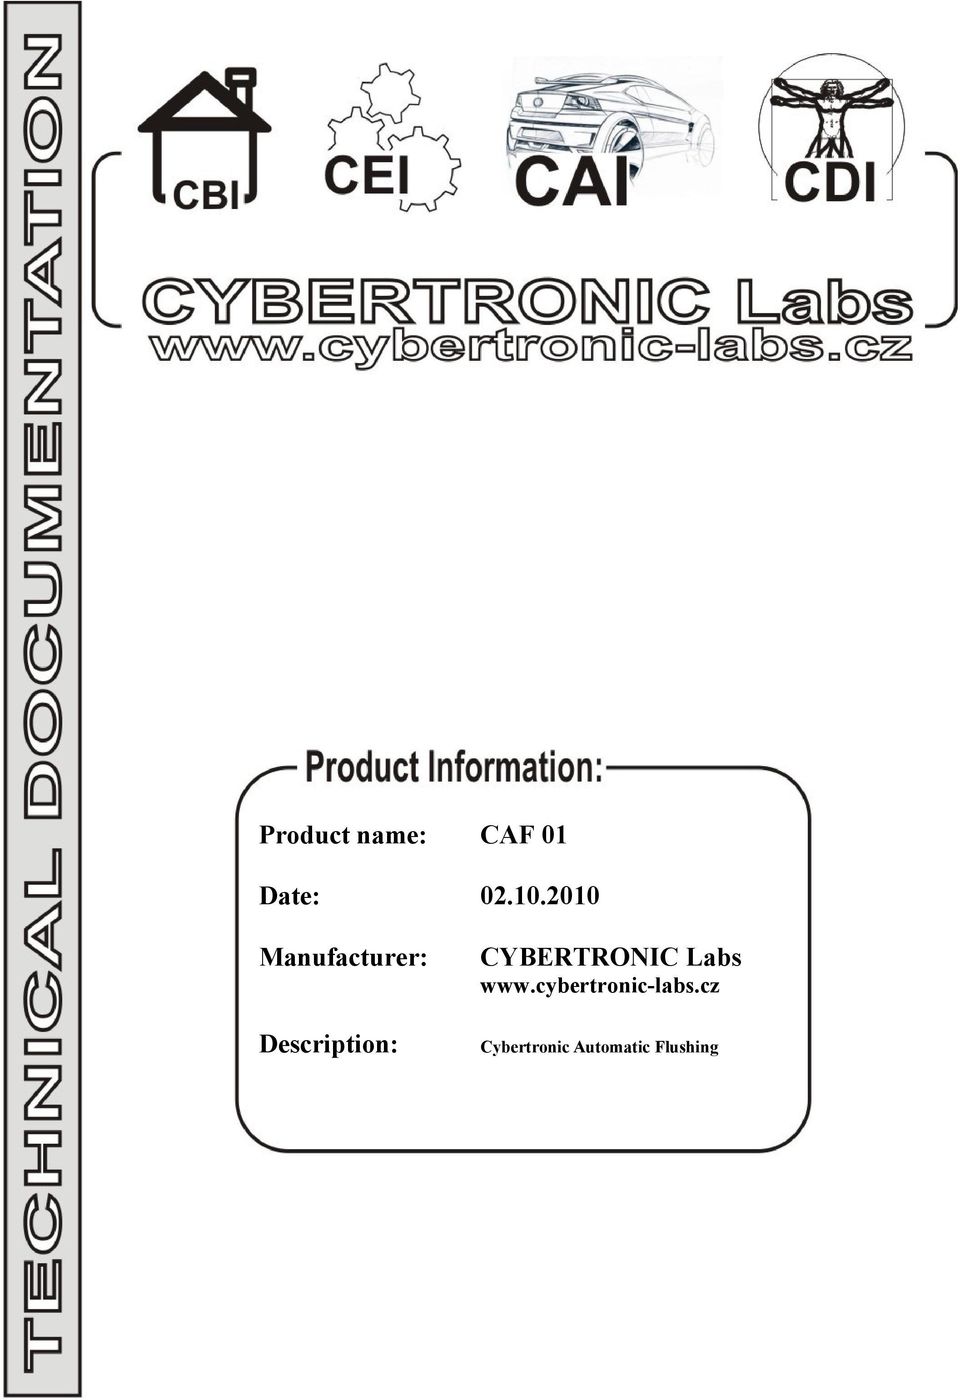 CYBERTRONIC Labs www.